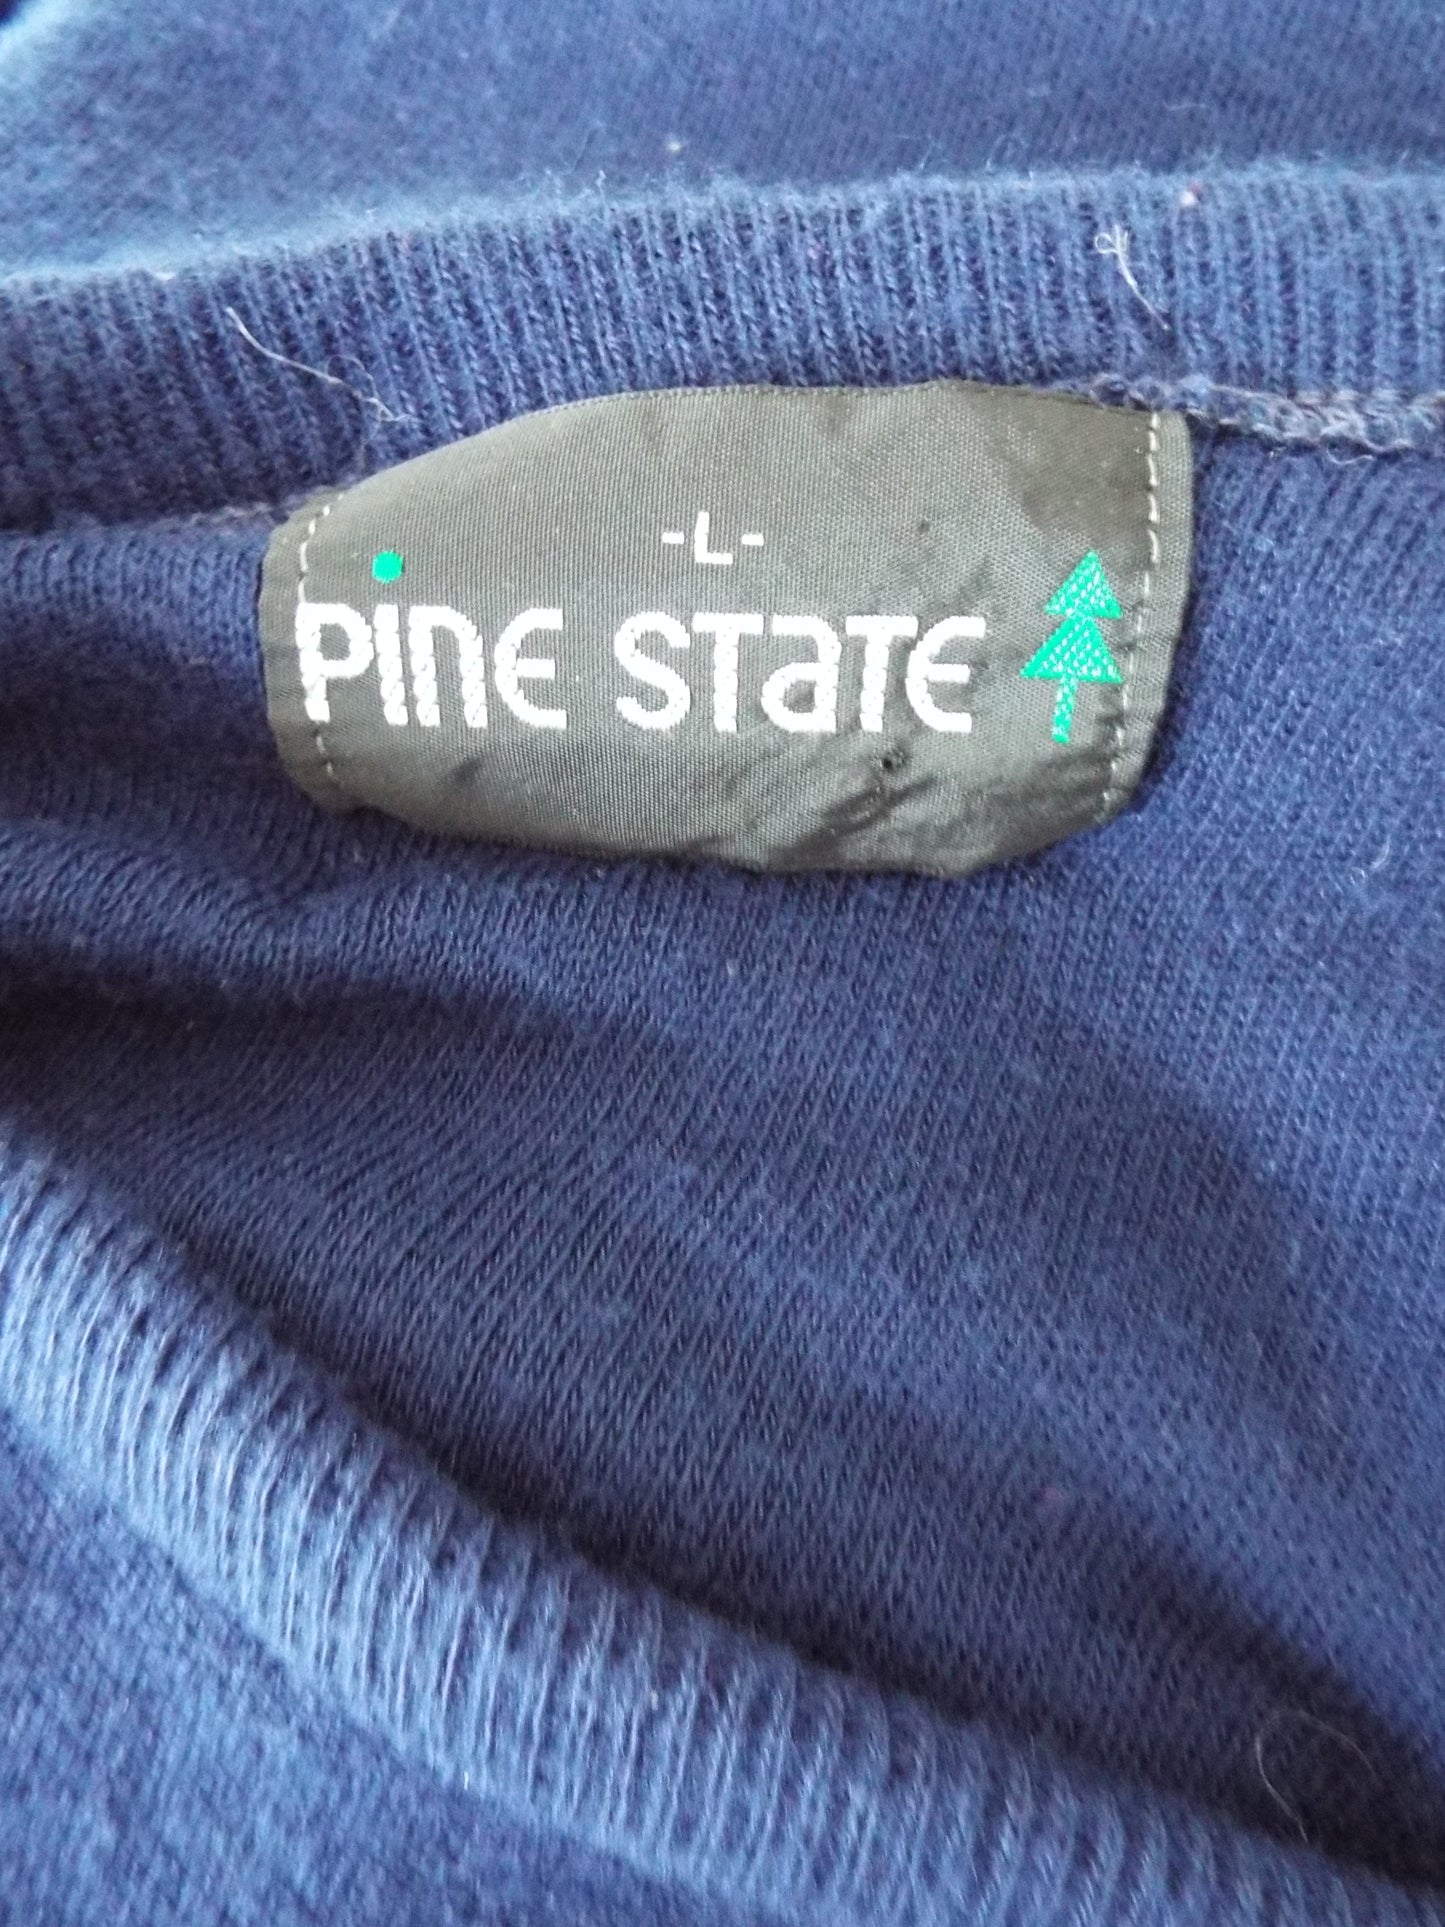 Vintage Long Sleeve Vee Neck West Virginia University Sweater by Pine State